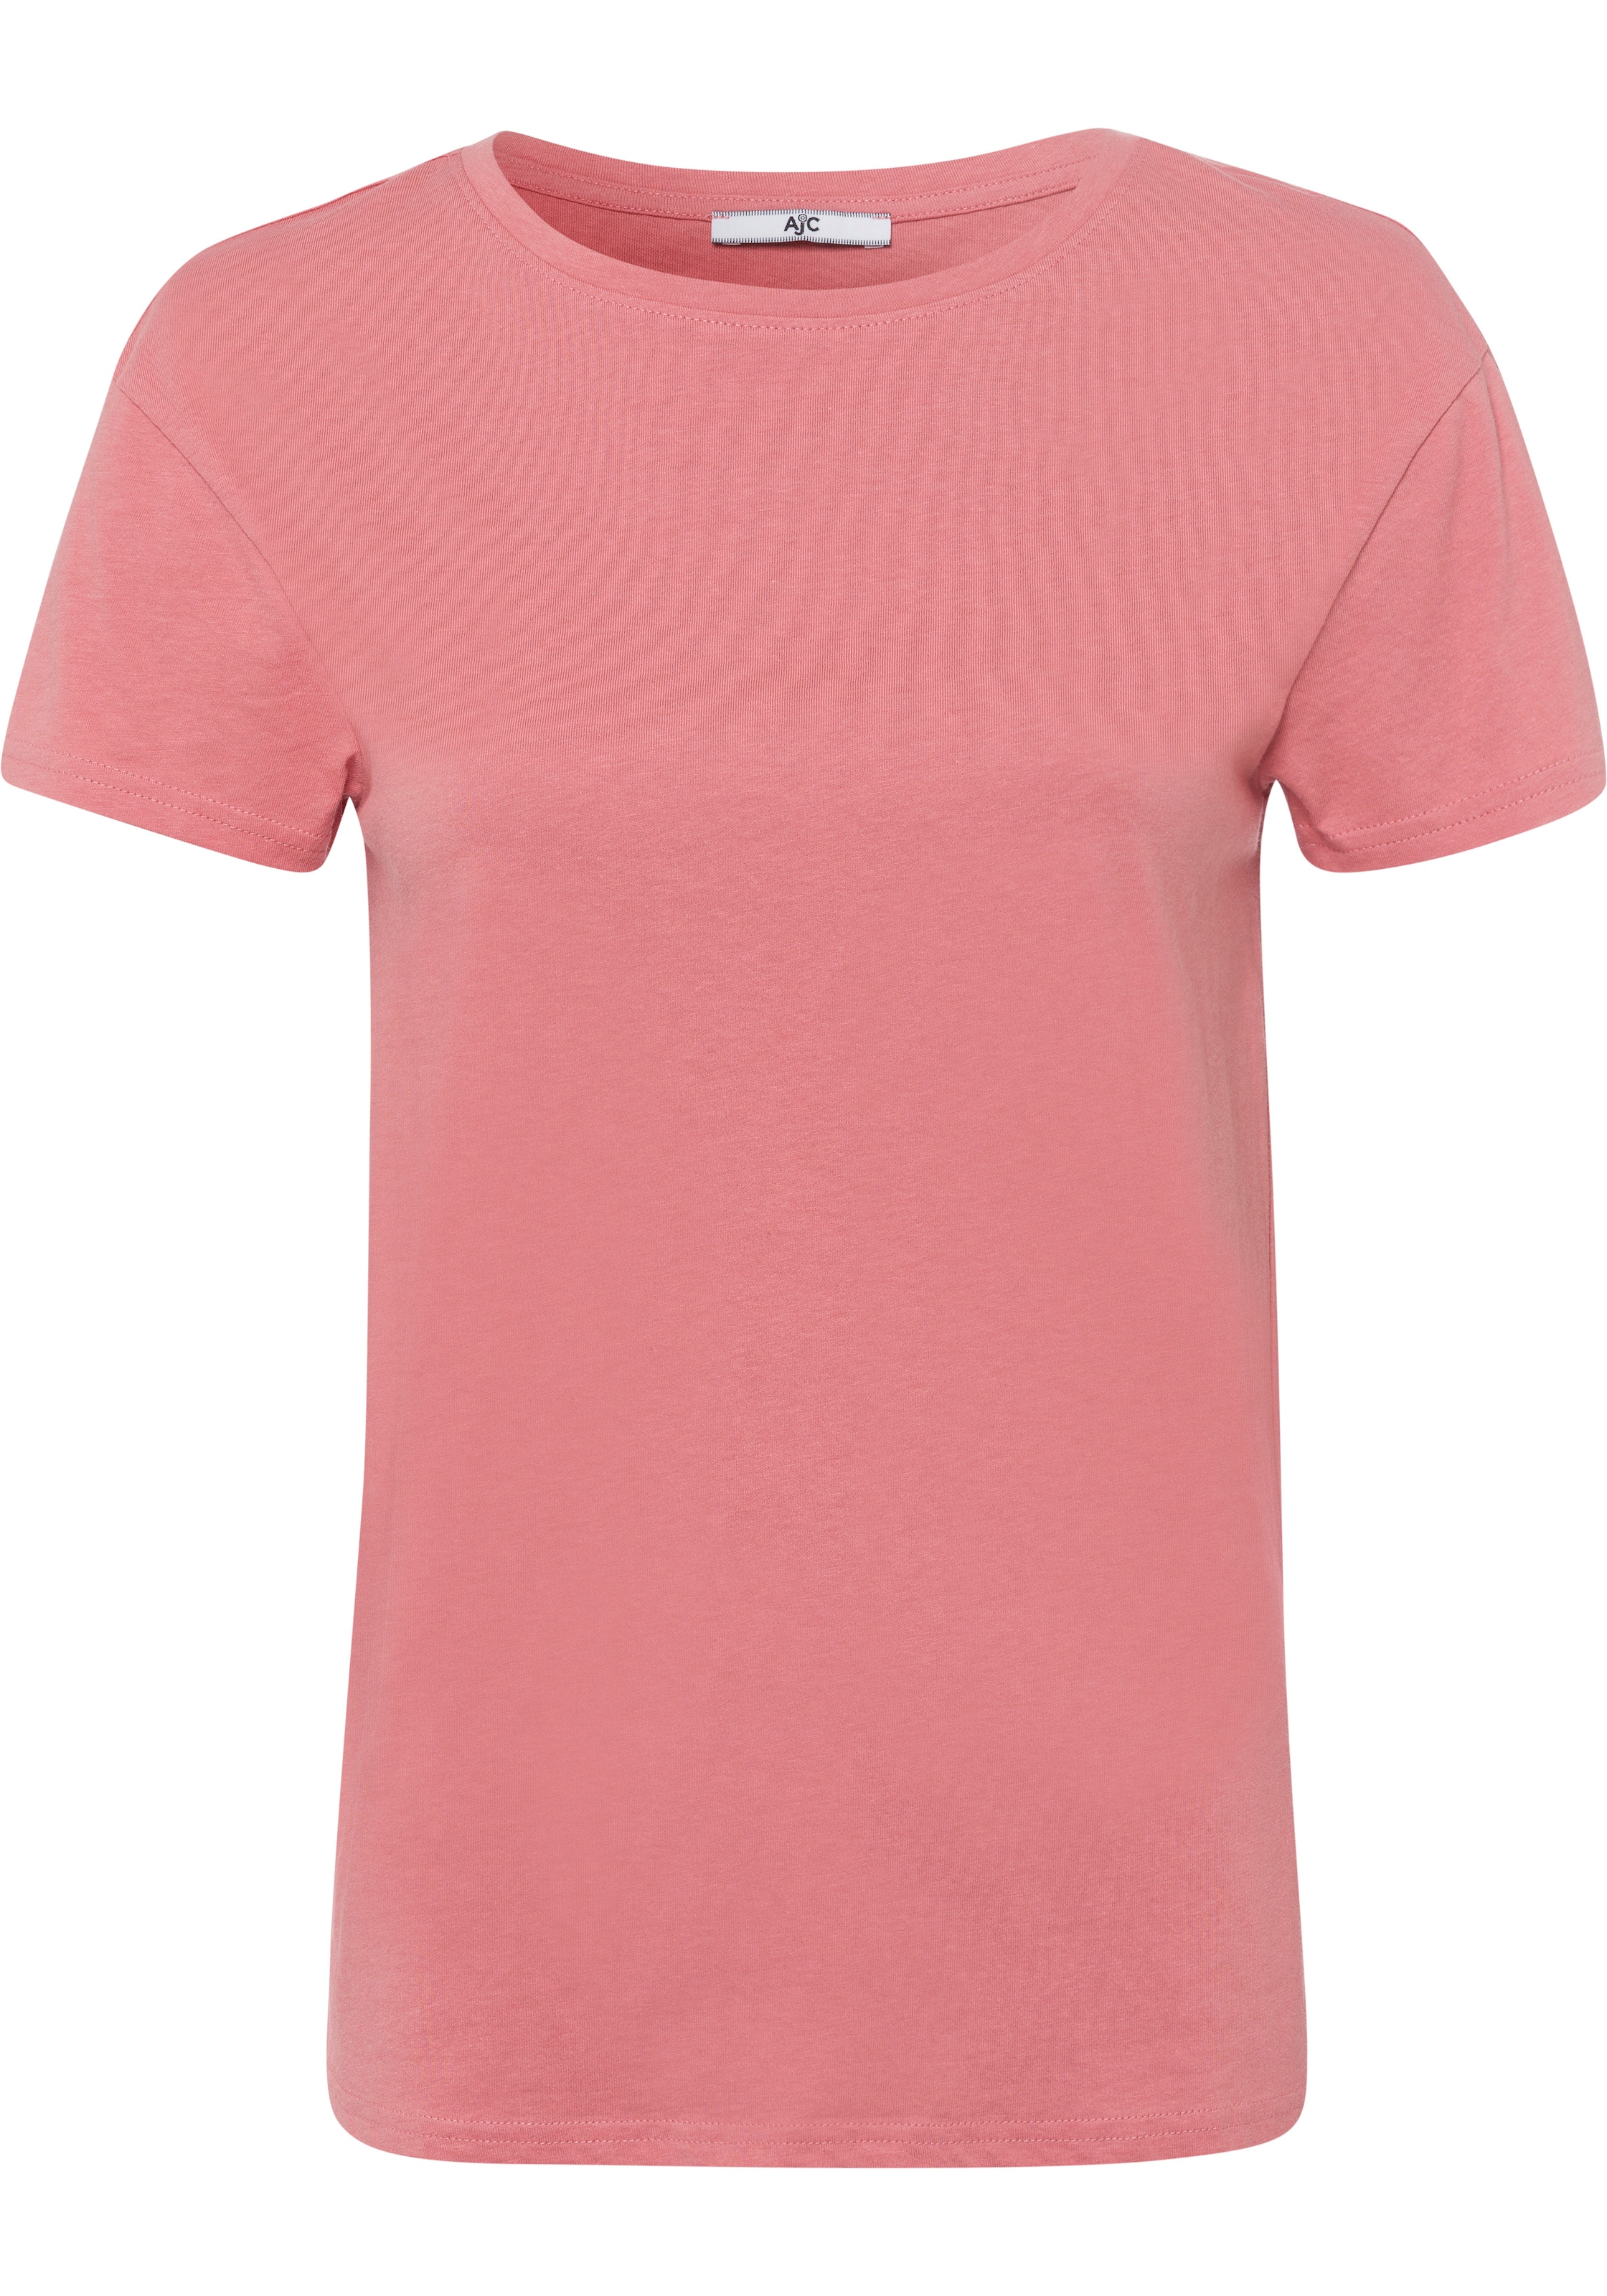 NEUE - Jelmoli-Versand AJC online Schweiz KOLLEKTION bei bestellen Oversized-Look trendigen T-Shirt, im